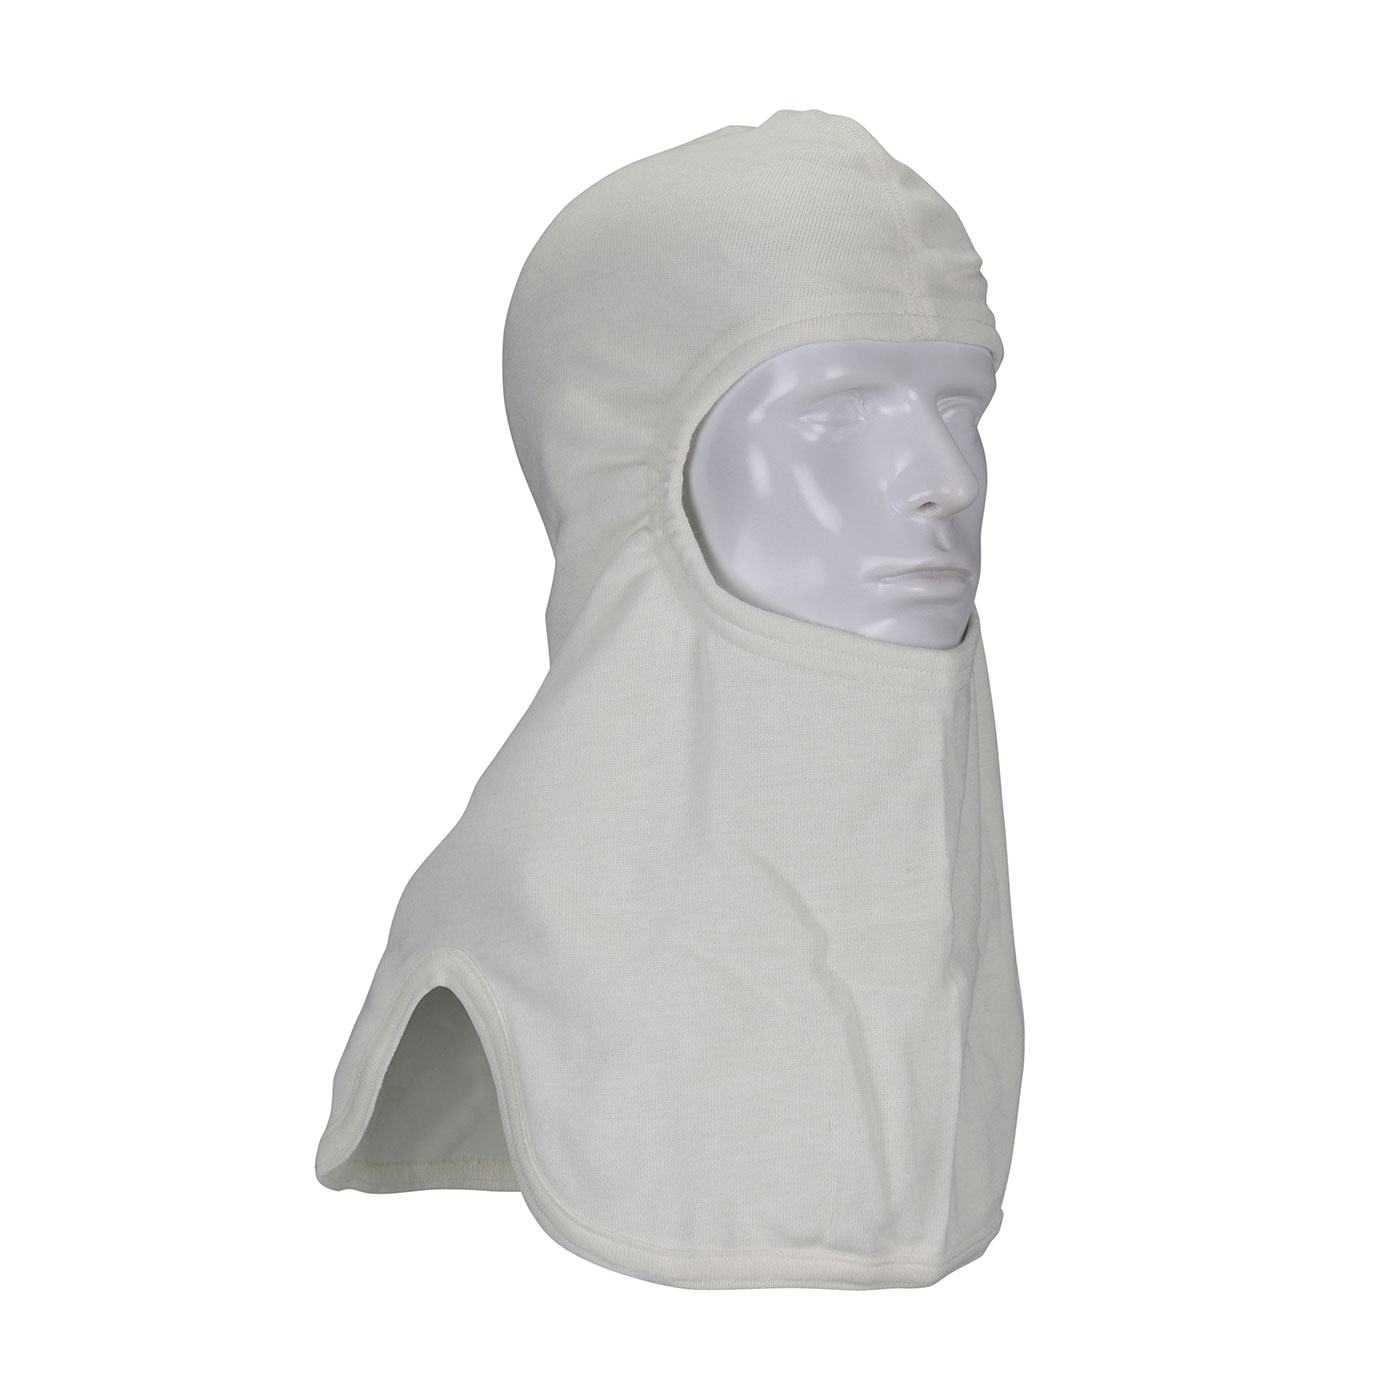 PIP® 906-2080NOL7 Single Layer Fire Resistant Hood With Bib, Universal, White, 16 in L, 20% Nomex®/80% Lenzing, 4 oz Fabric, Tri-Cut Full Face Closure